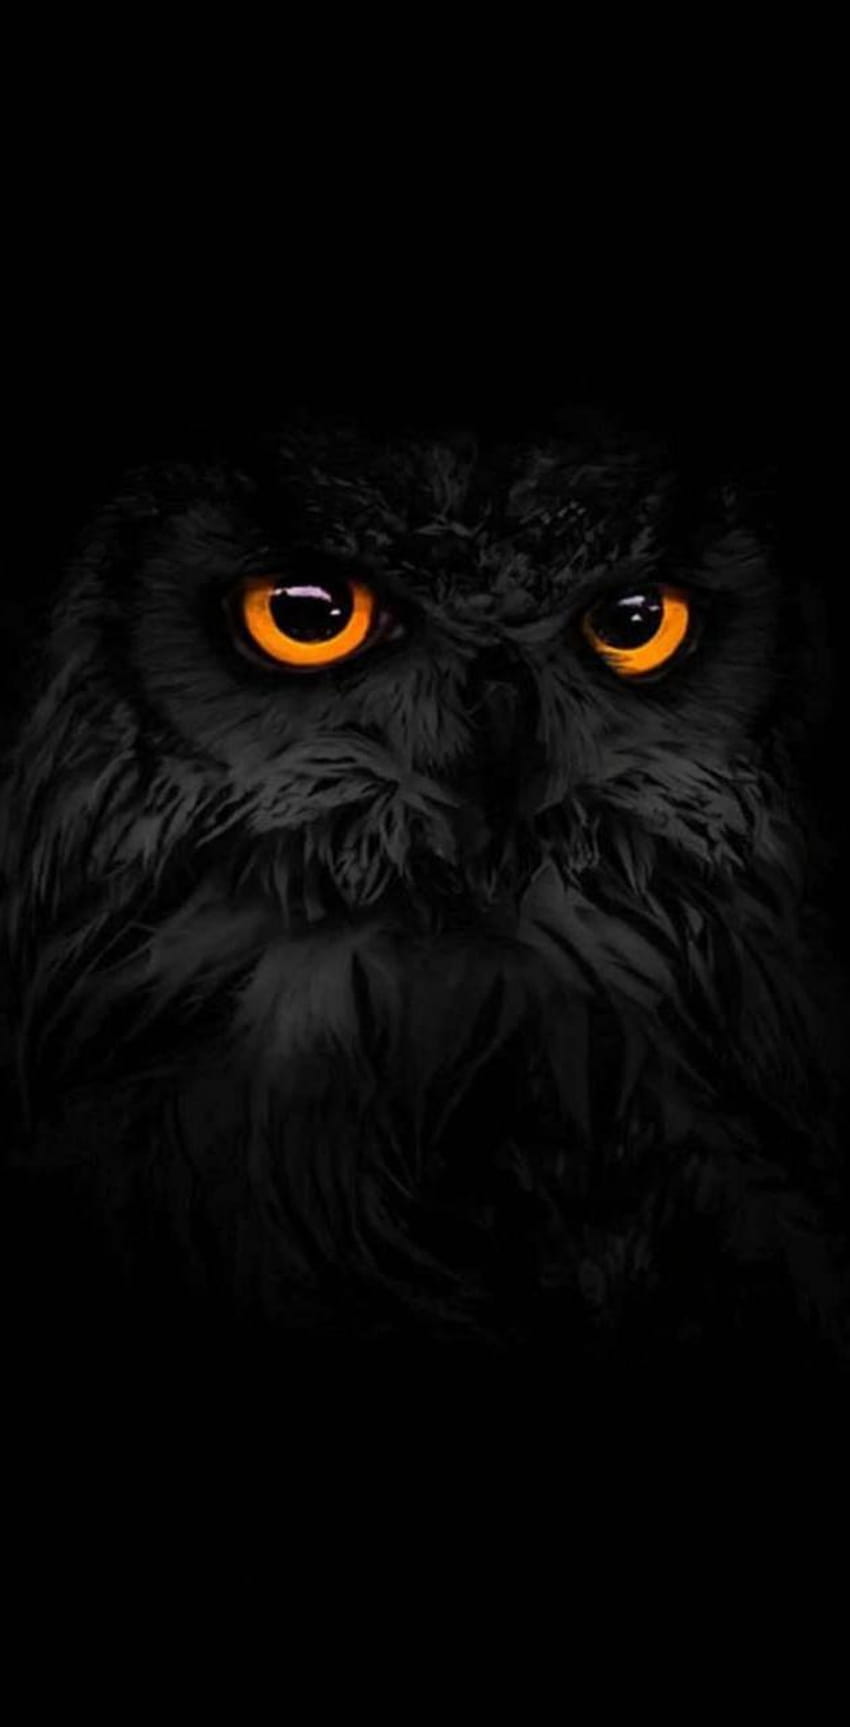 Czarna sowa autorstwa Aegon___, logo sowy Tapeta na telefon HD